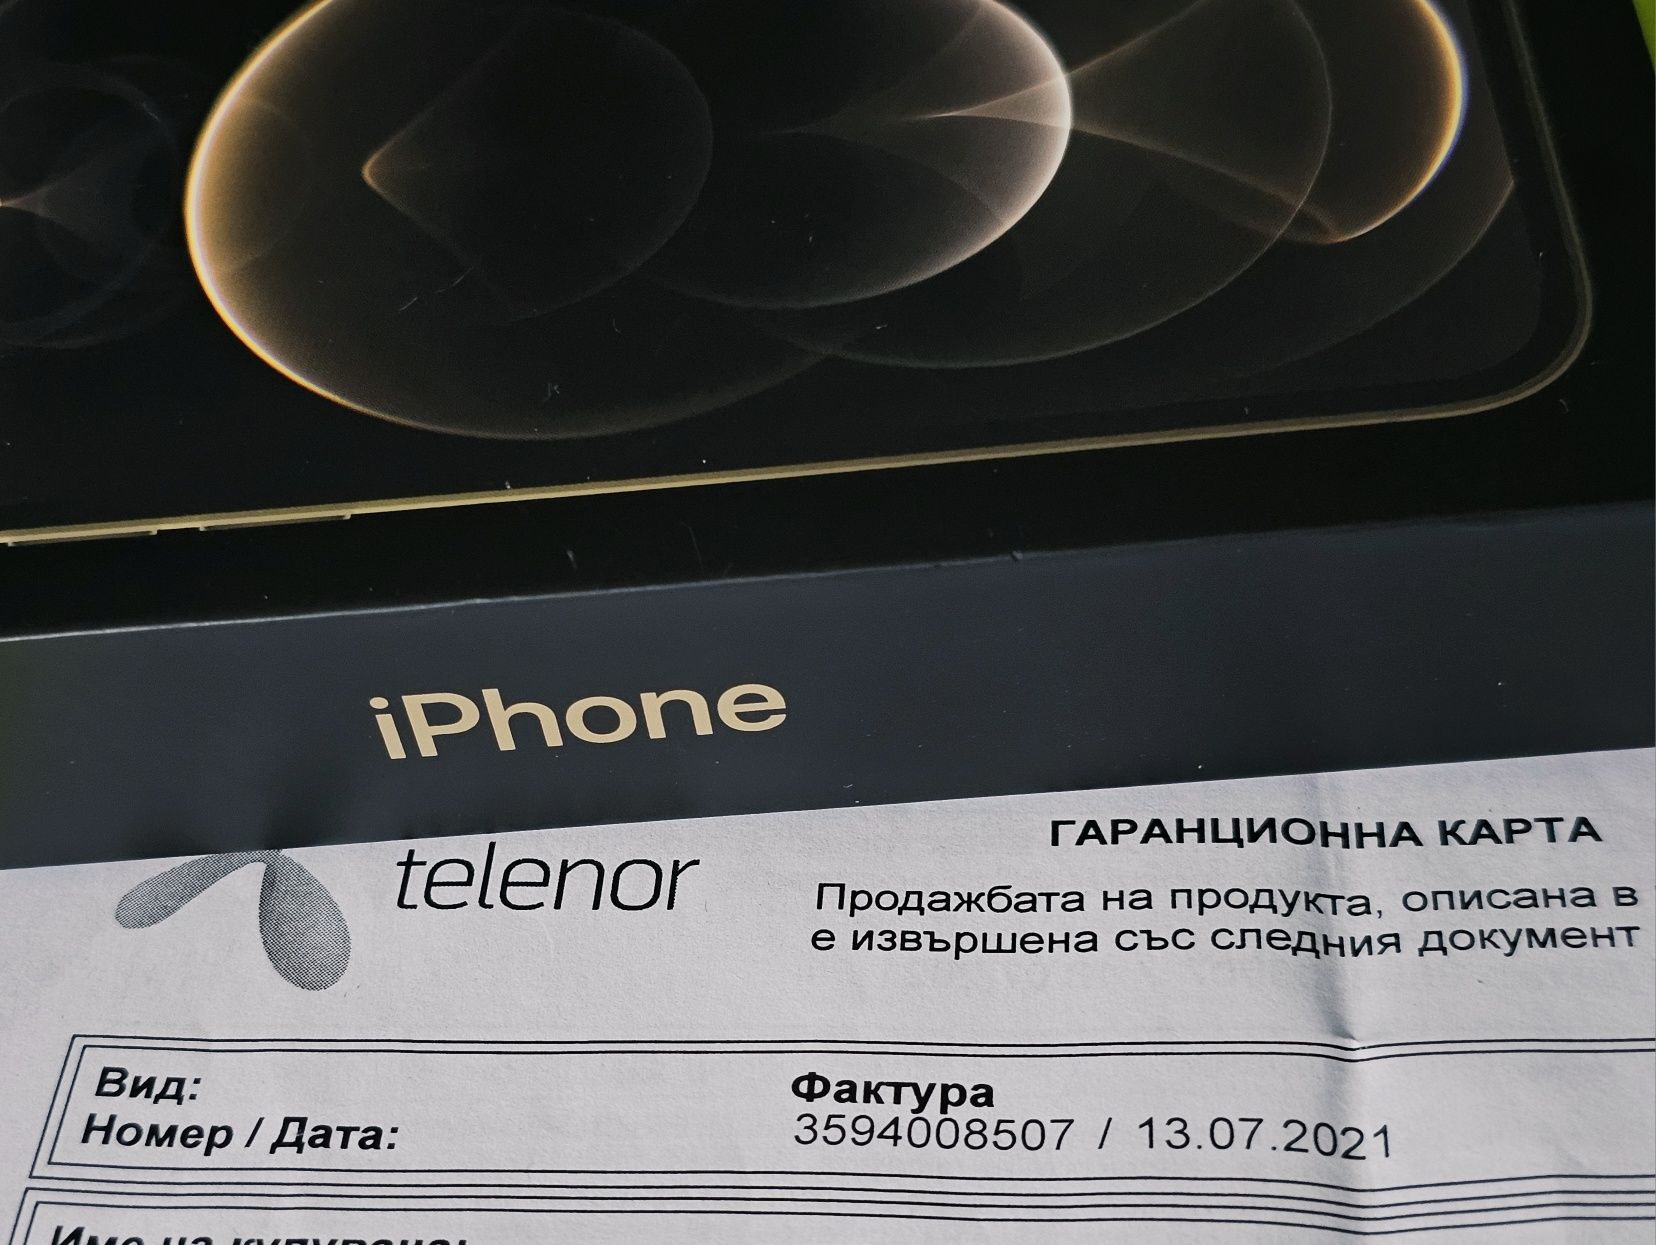 128GB iPhone 12 PRO Telenor Гаранция 2023г. Gold / Златен